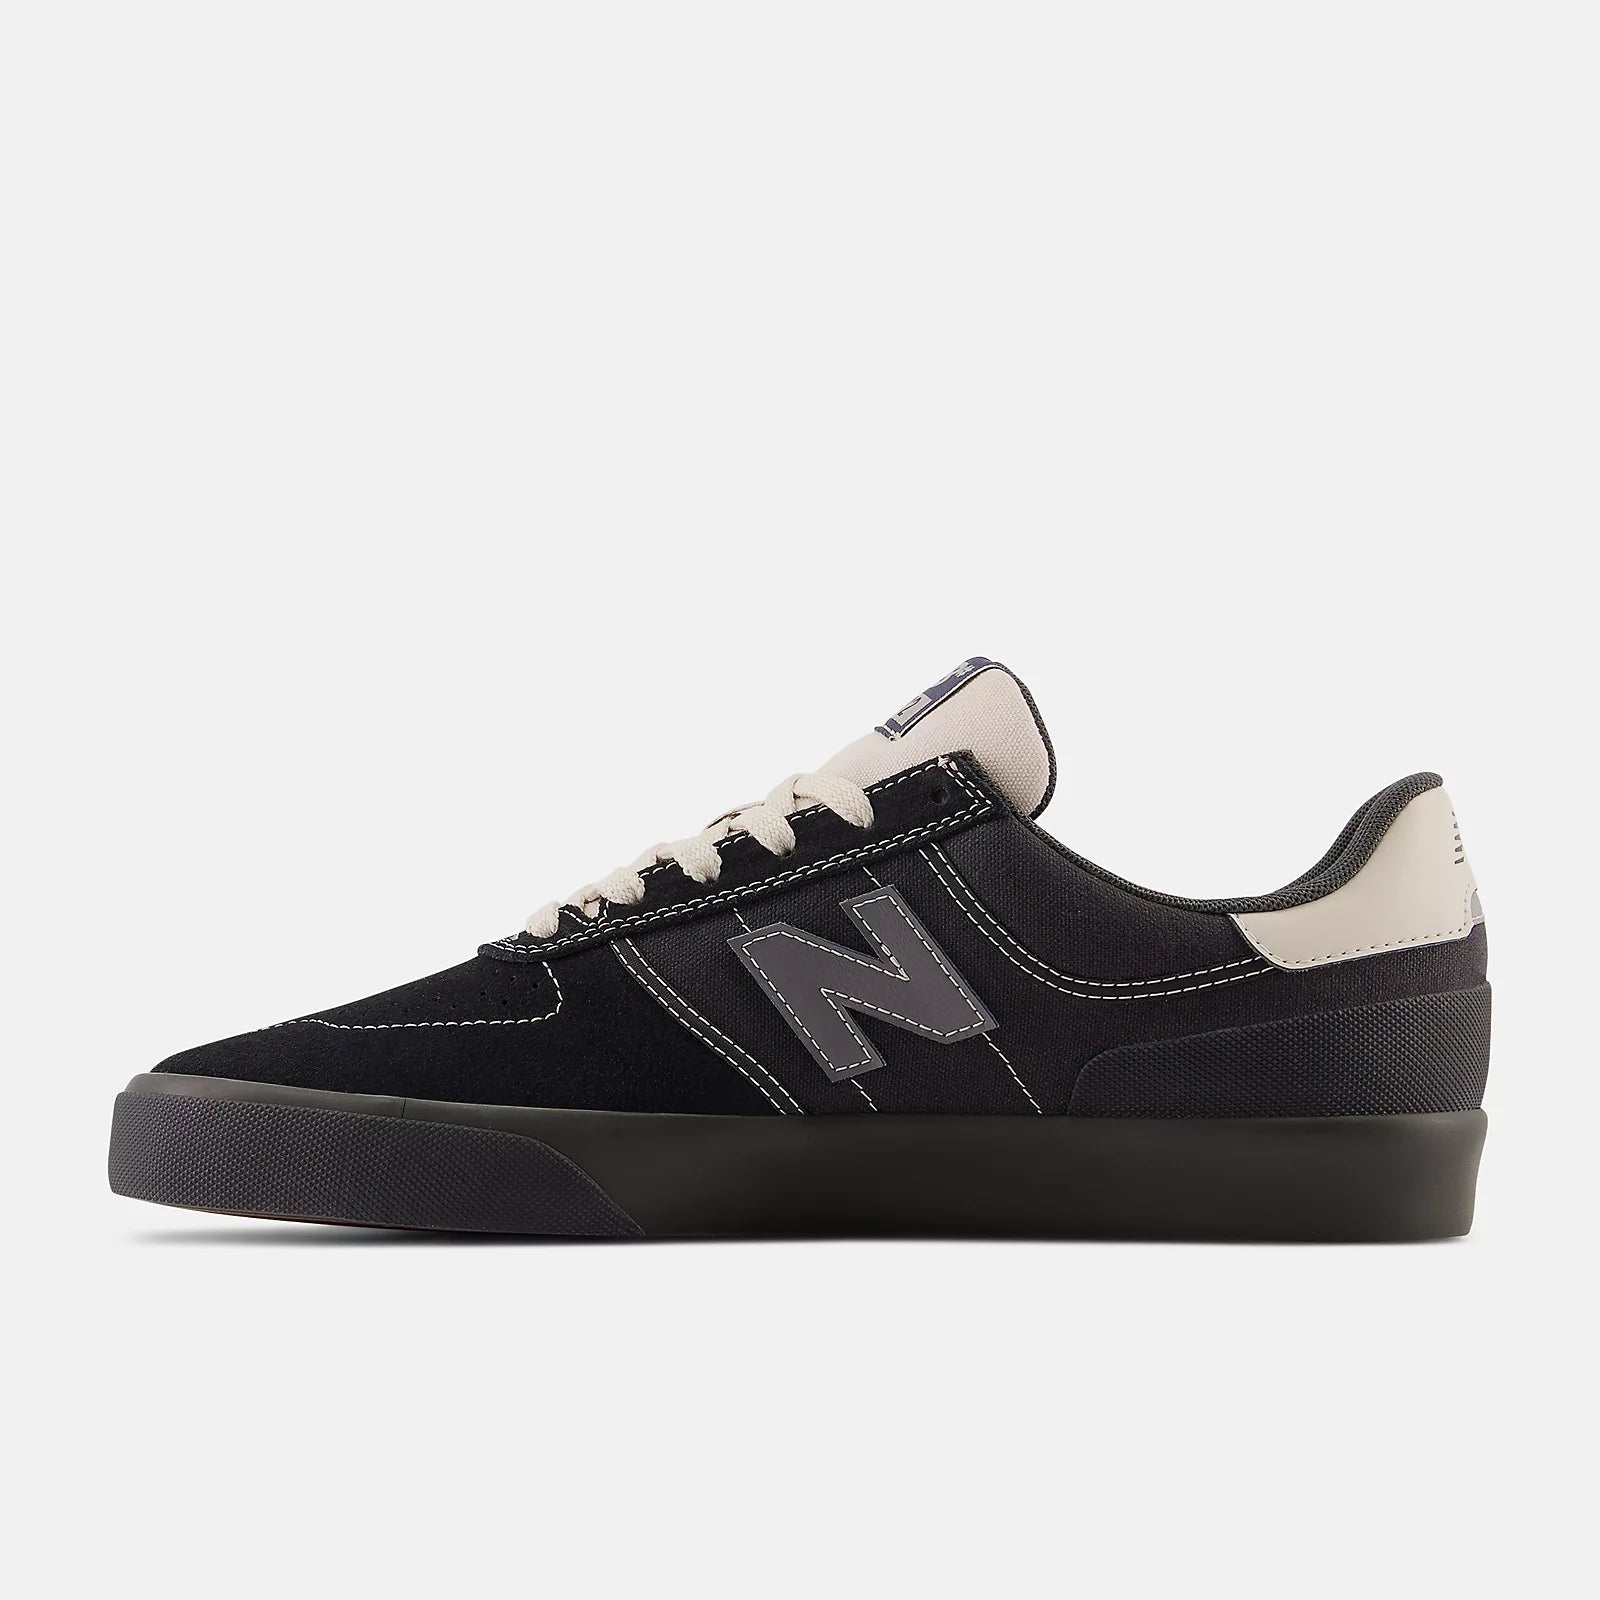 NB NUMWEIC 272 Shoes Black/Sea Salt Men's Skate Shoes New Balance 